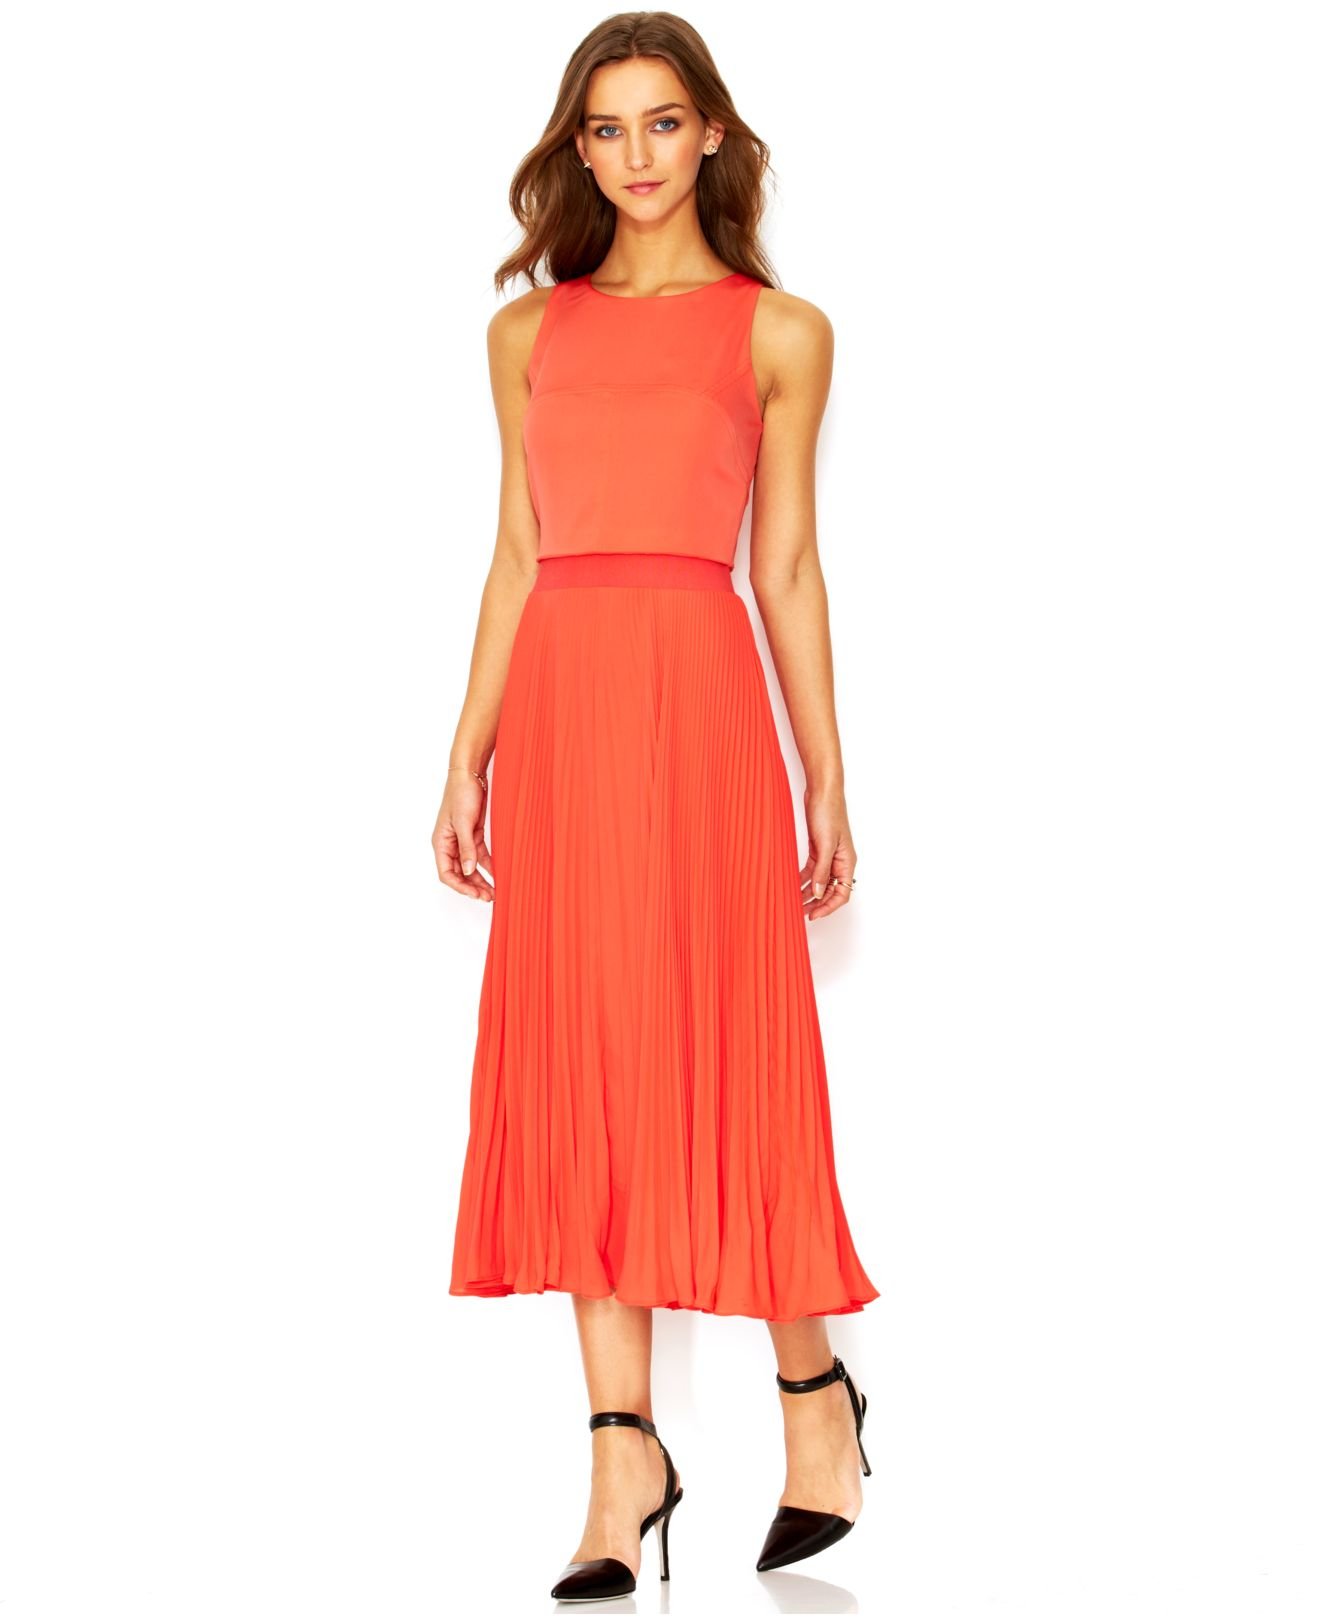 rachel roy orange dress